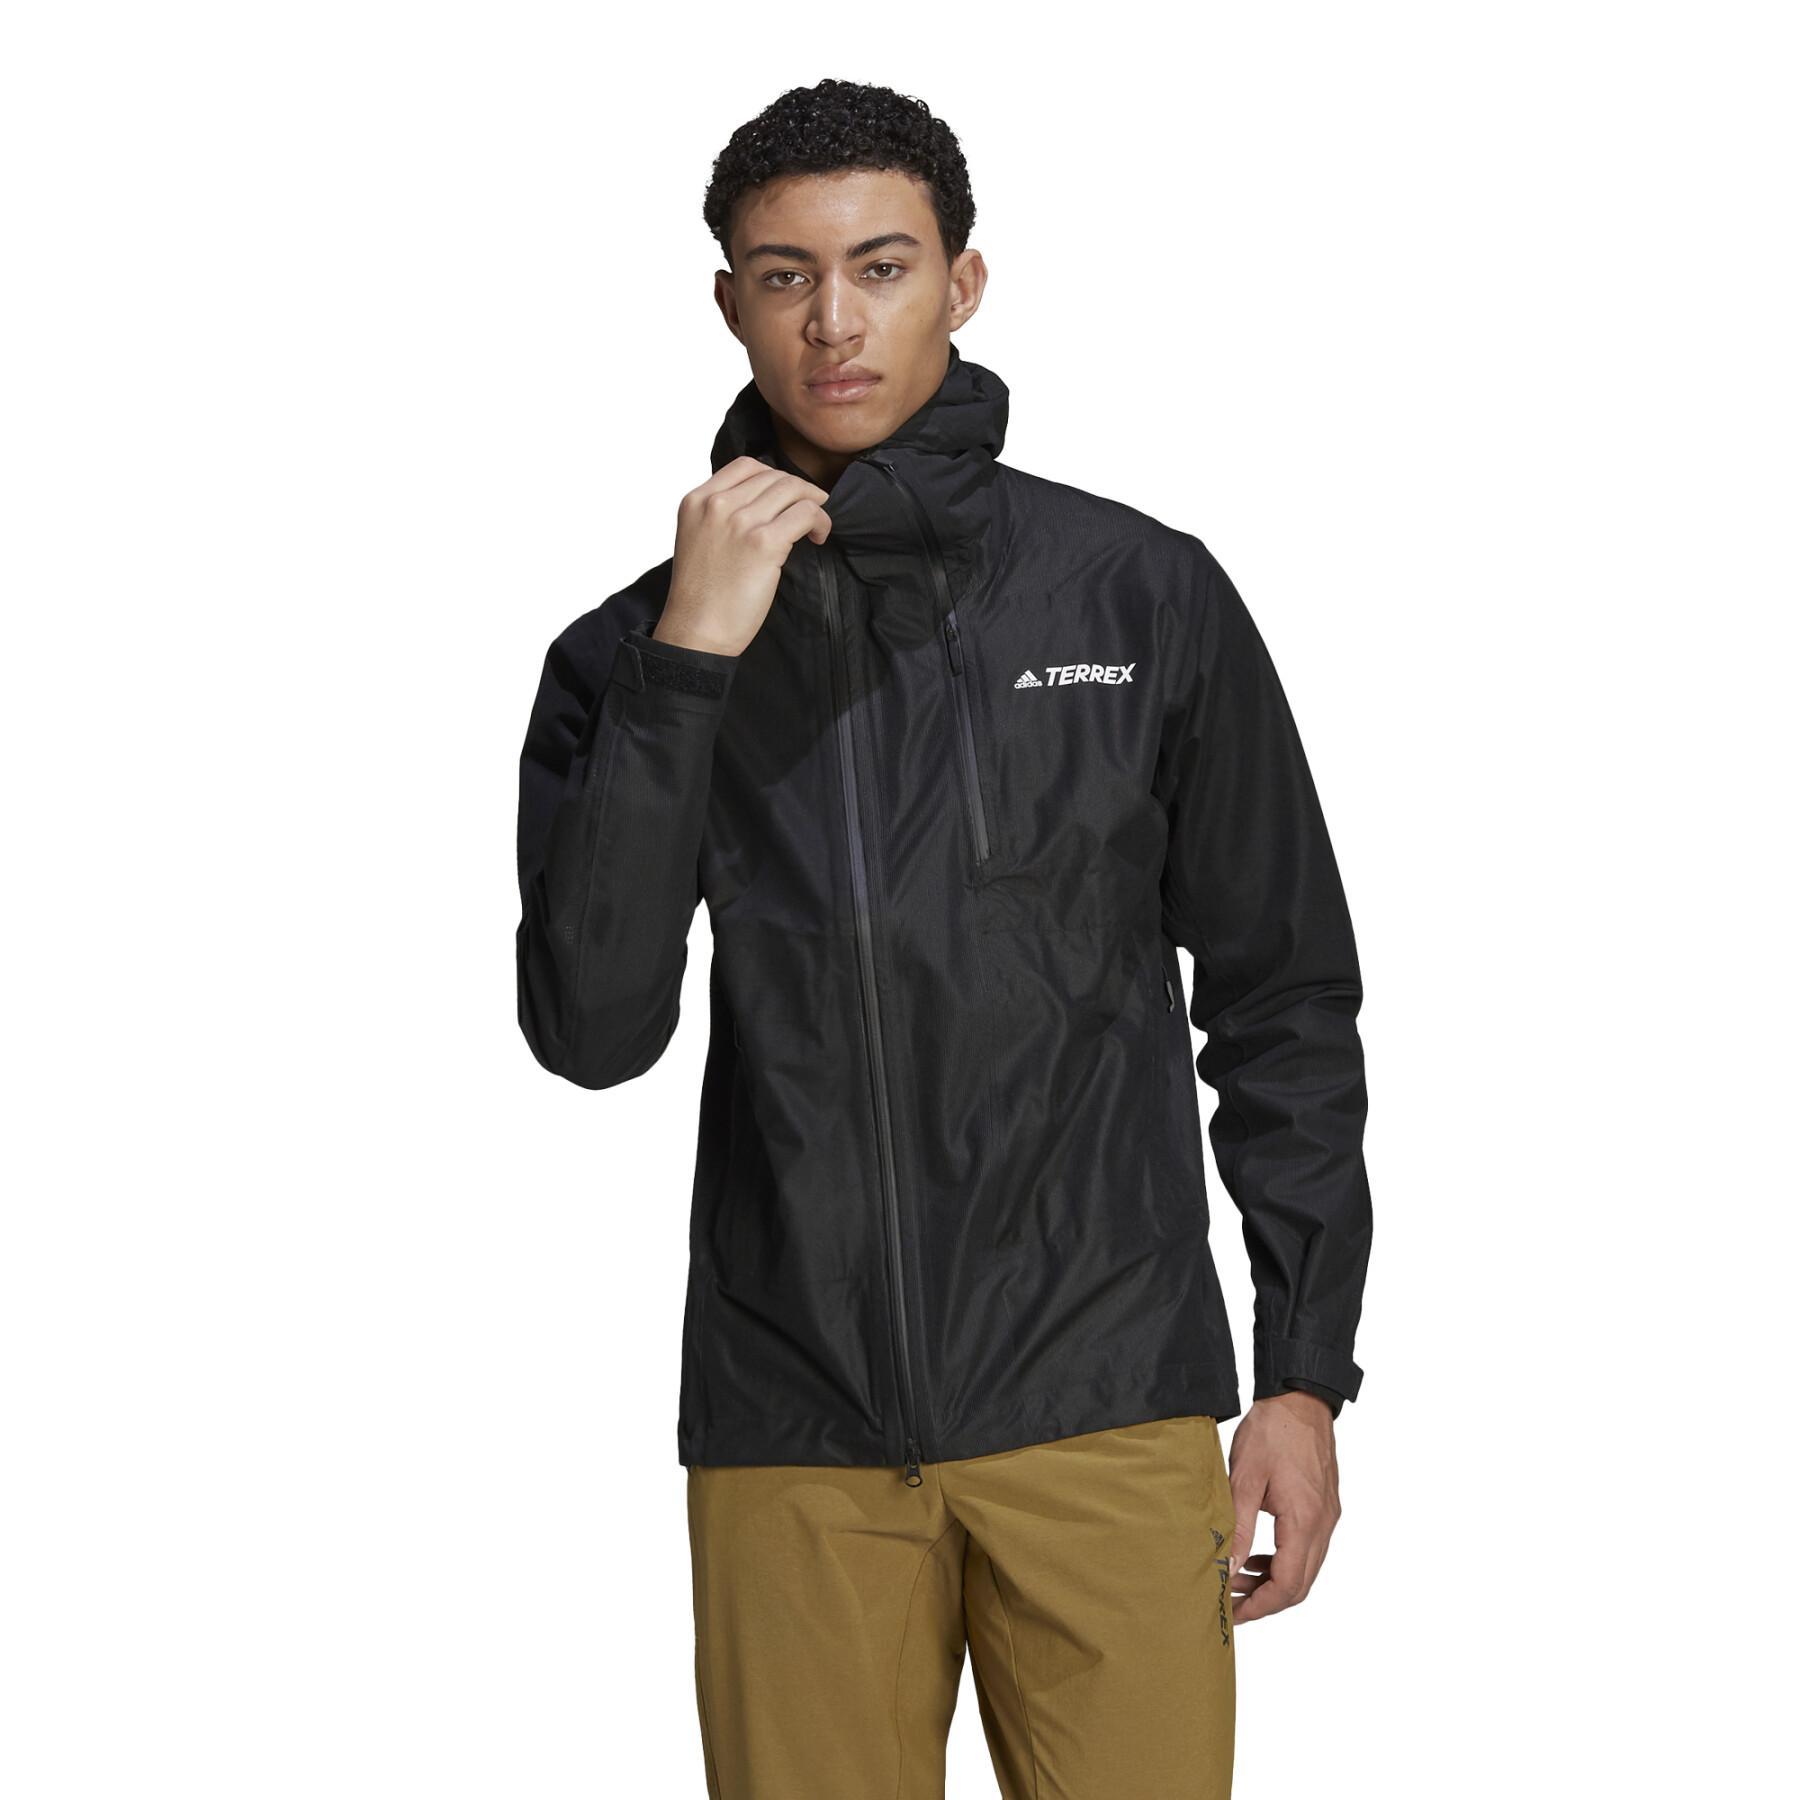 Rain jacket adidas Terrex Primeknit